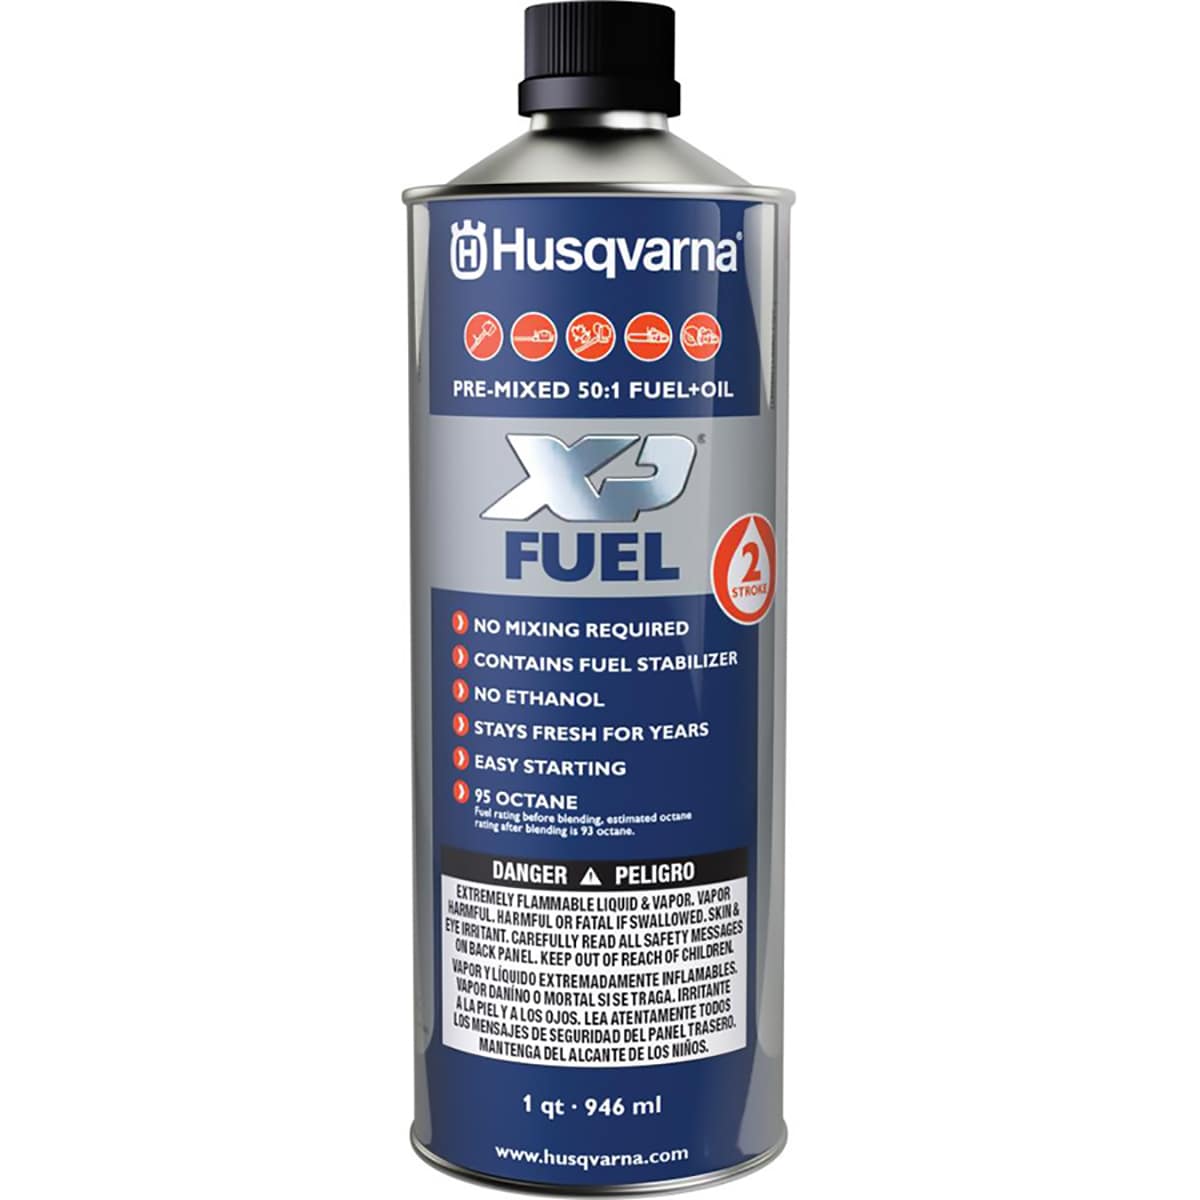 Husqvarna Pre-mix fuel-Quart 50:1 Ethanol Free Pre-Blended 2-Cycle Fuel | 584309701